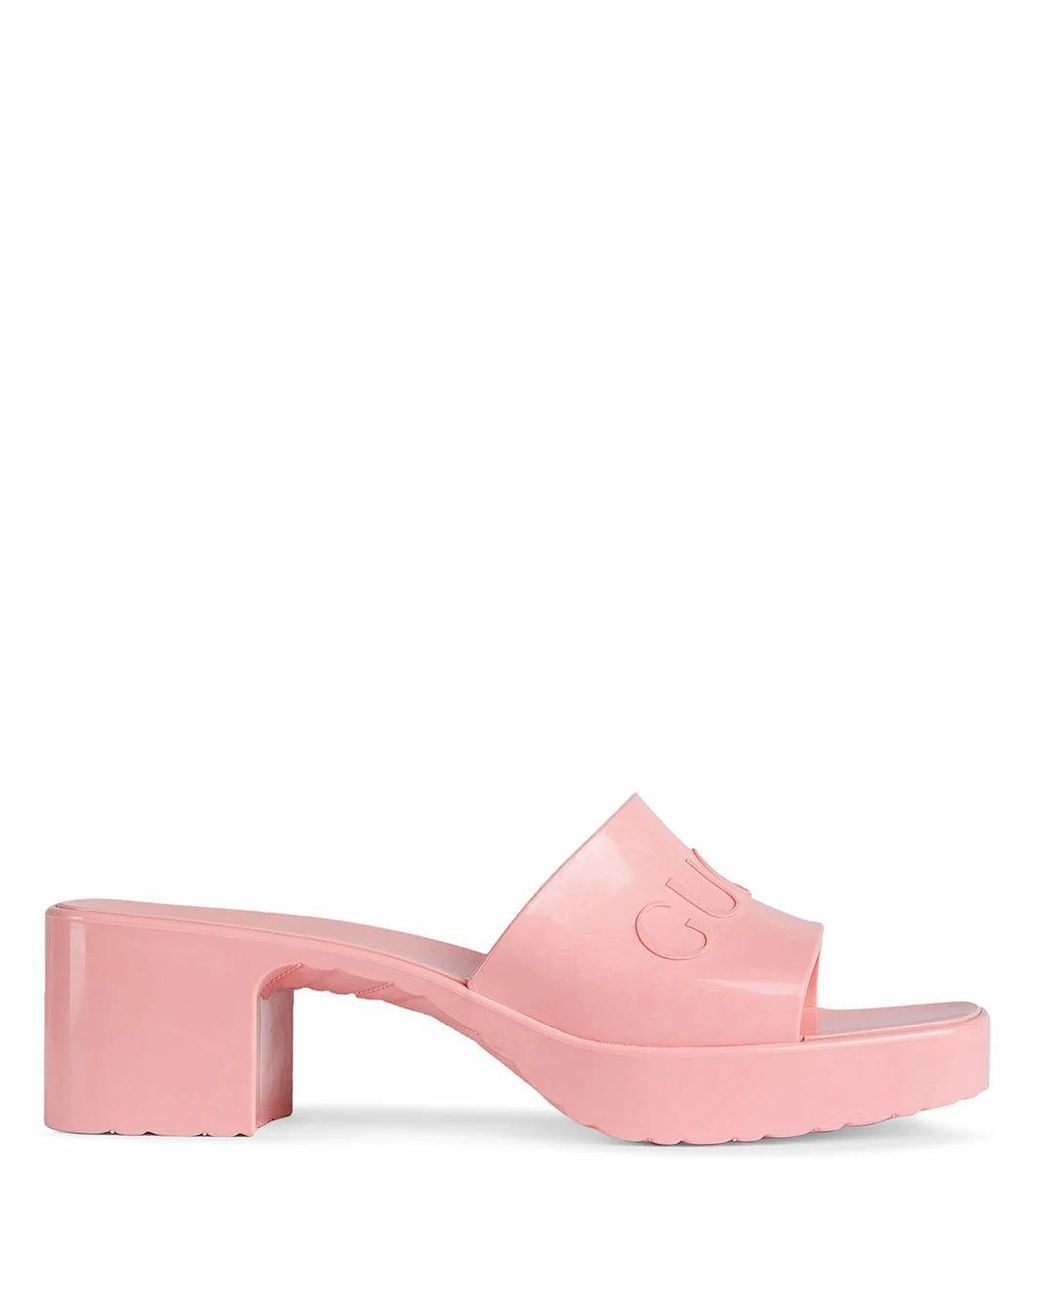 Gucci Rubber Slide Sandal, Pink, Rubber | Lyst